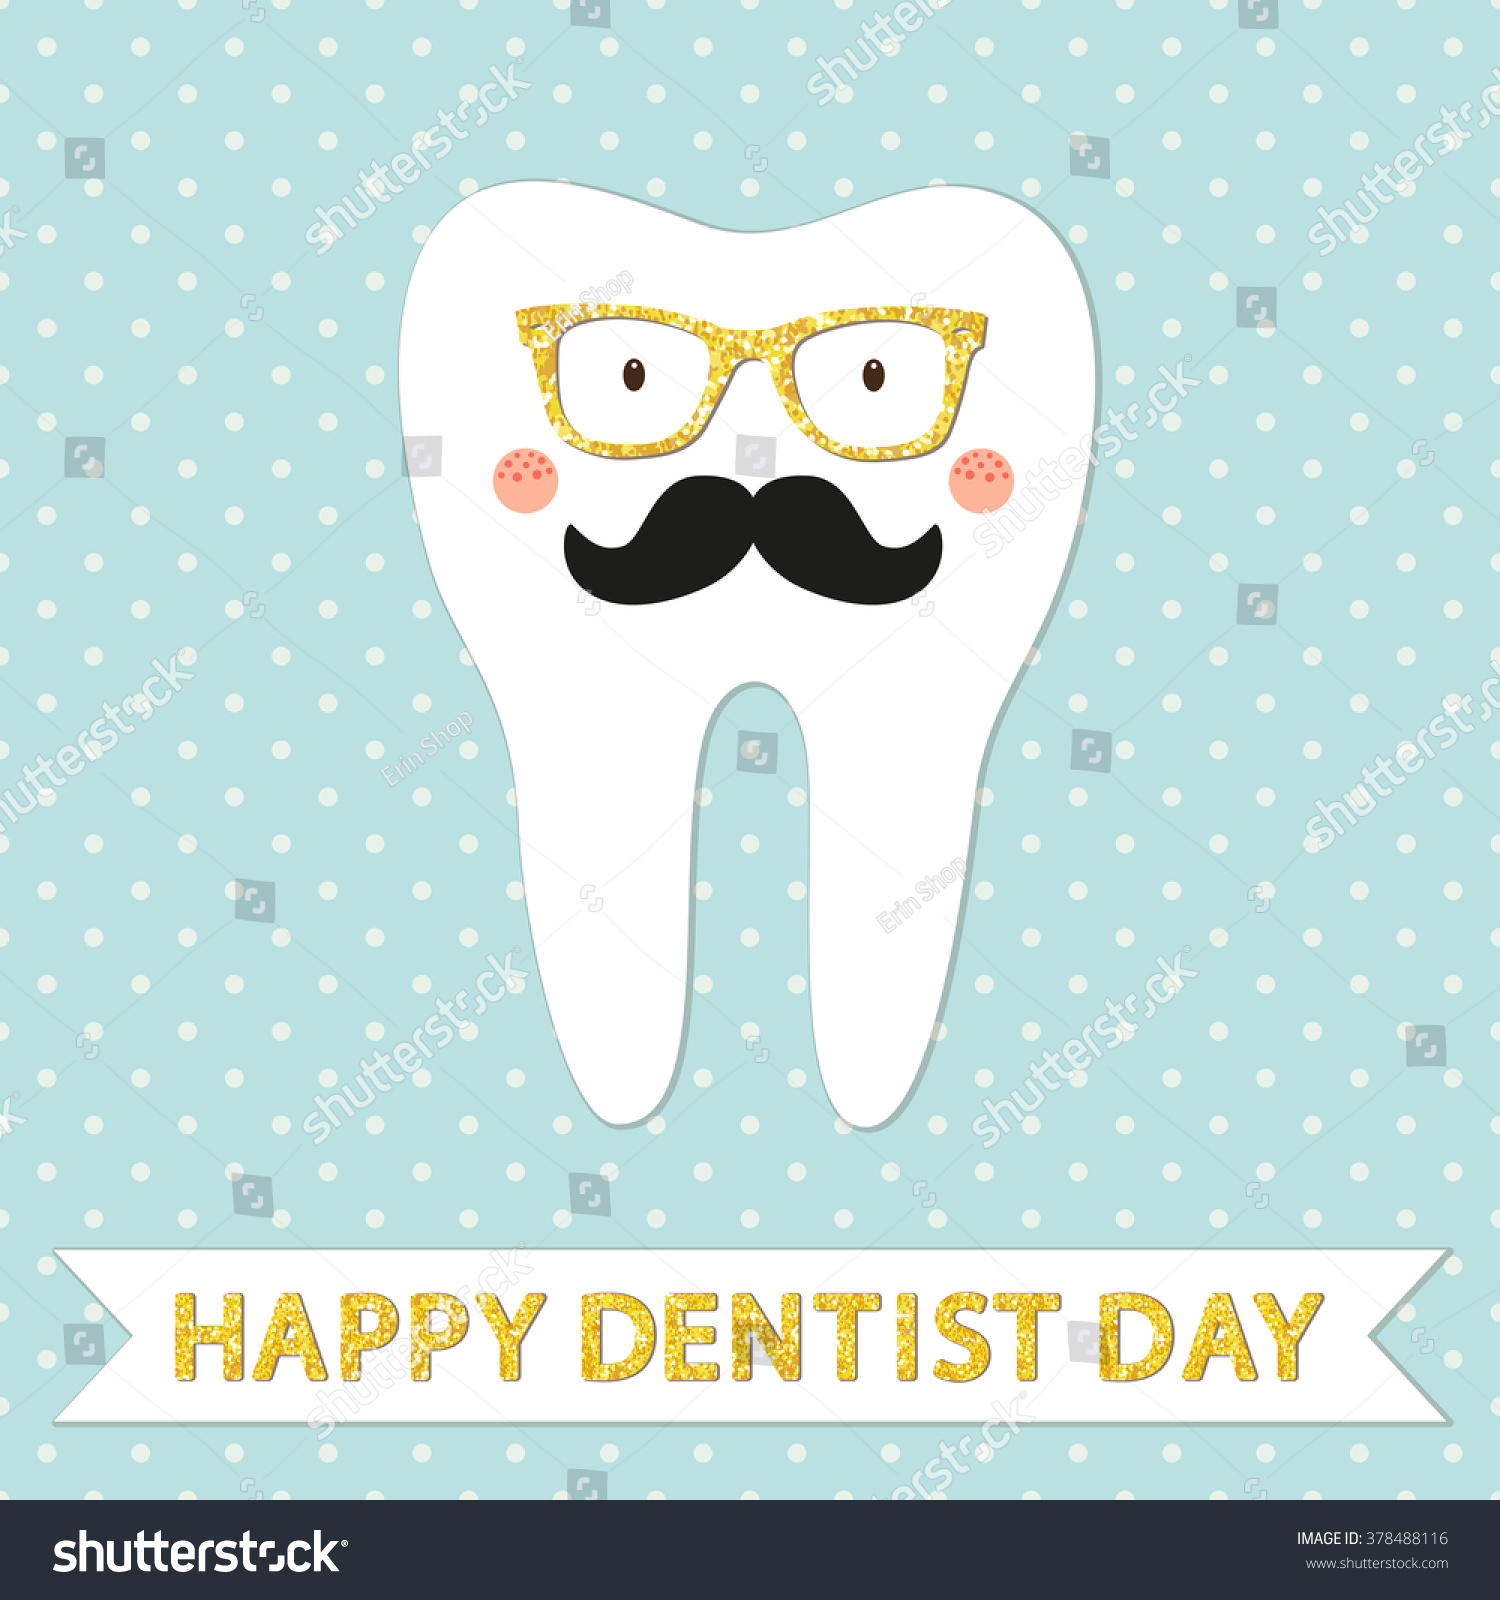 Happy dentist Day